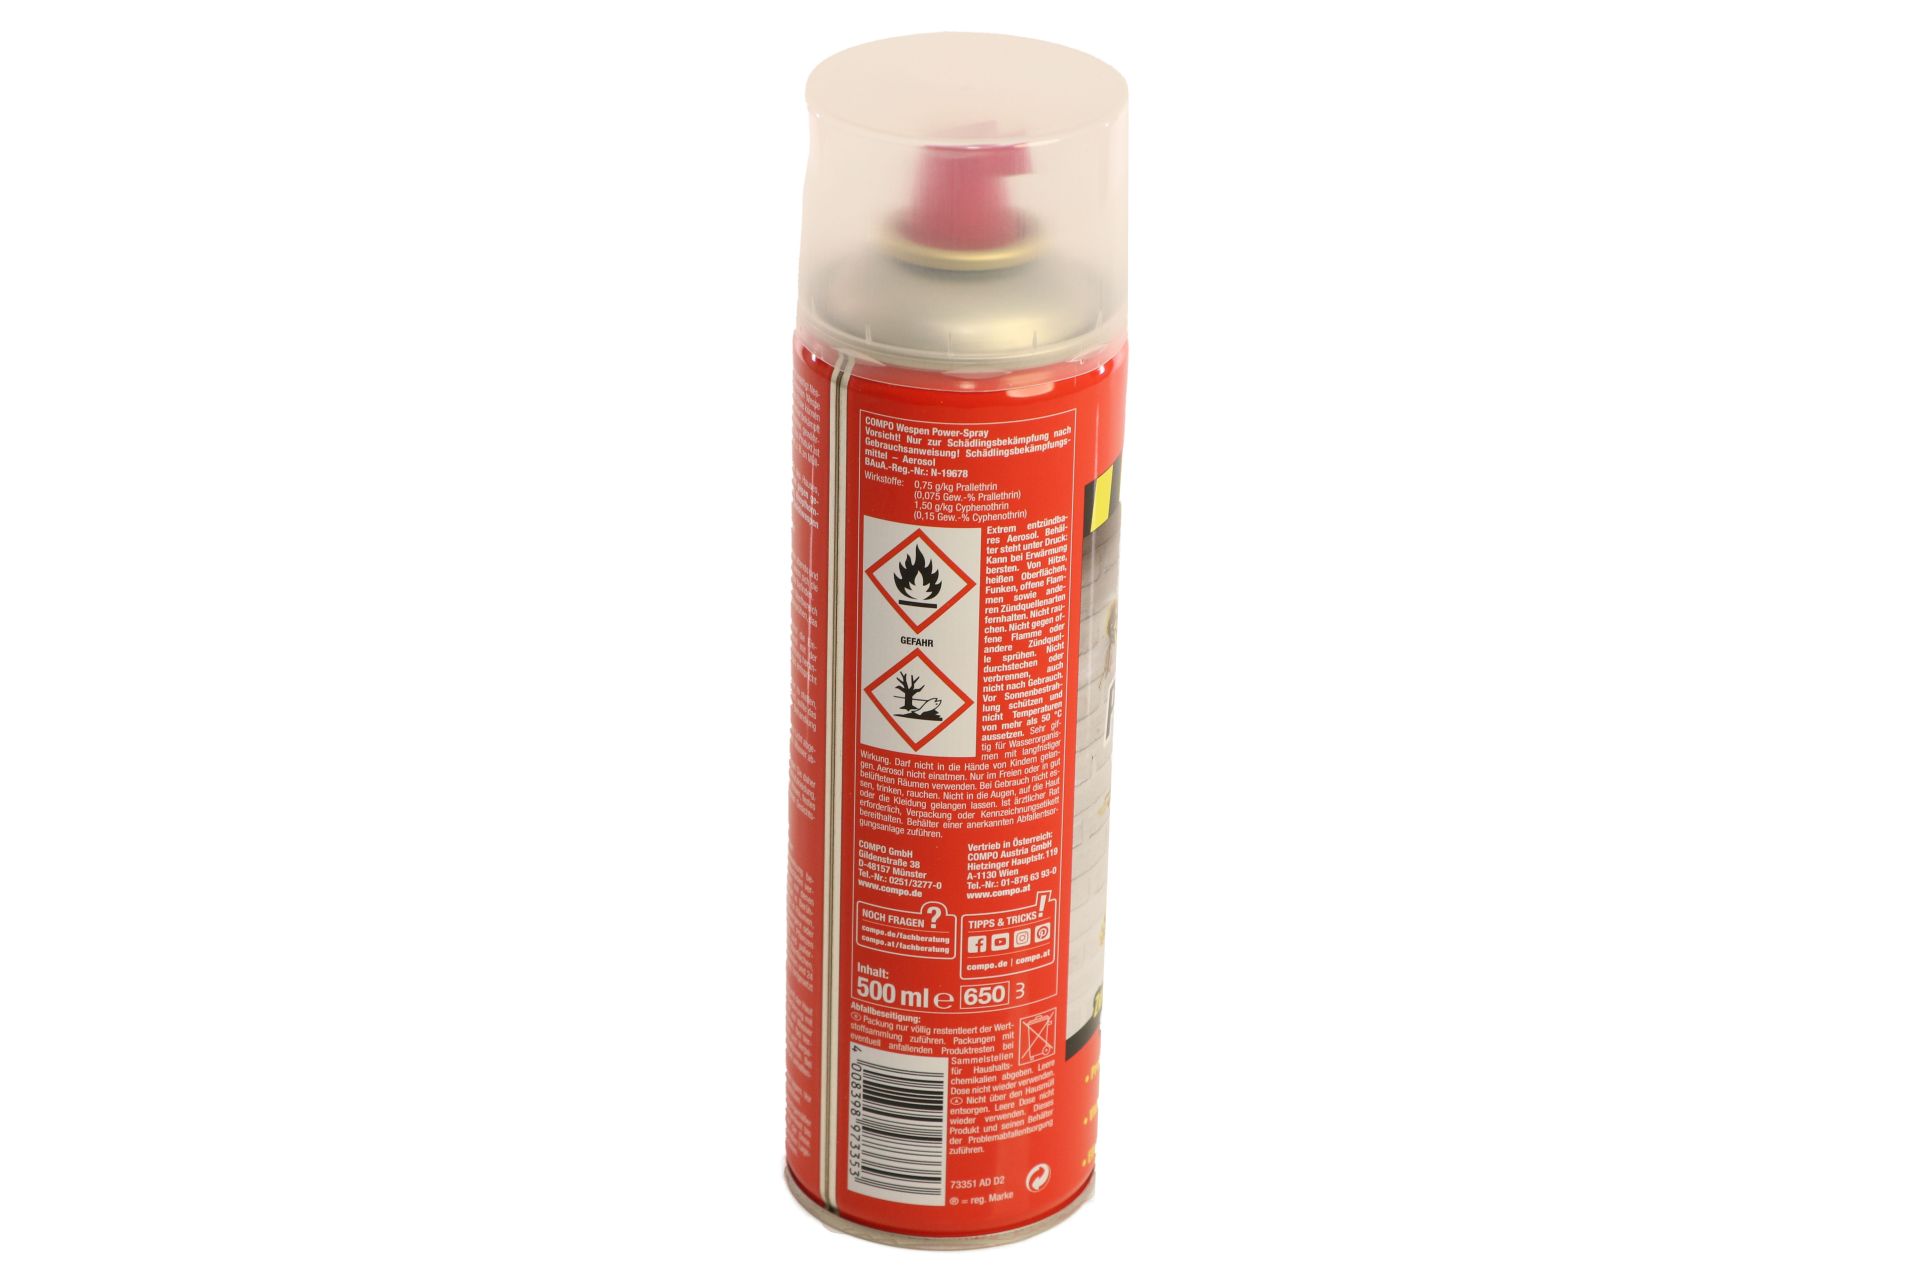 COMPO Wespen Power-Spray, 500 ml